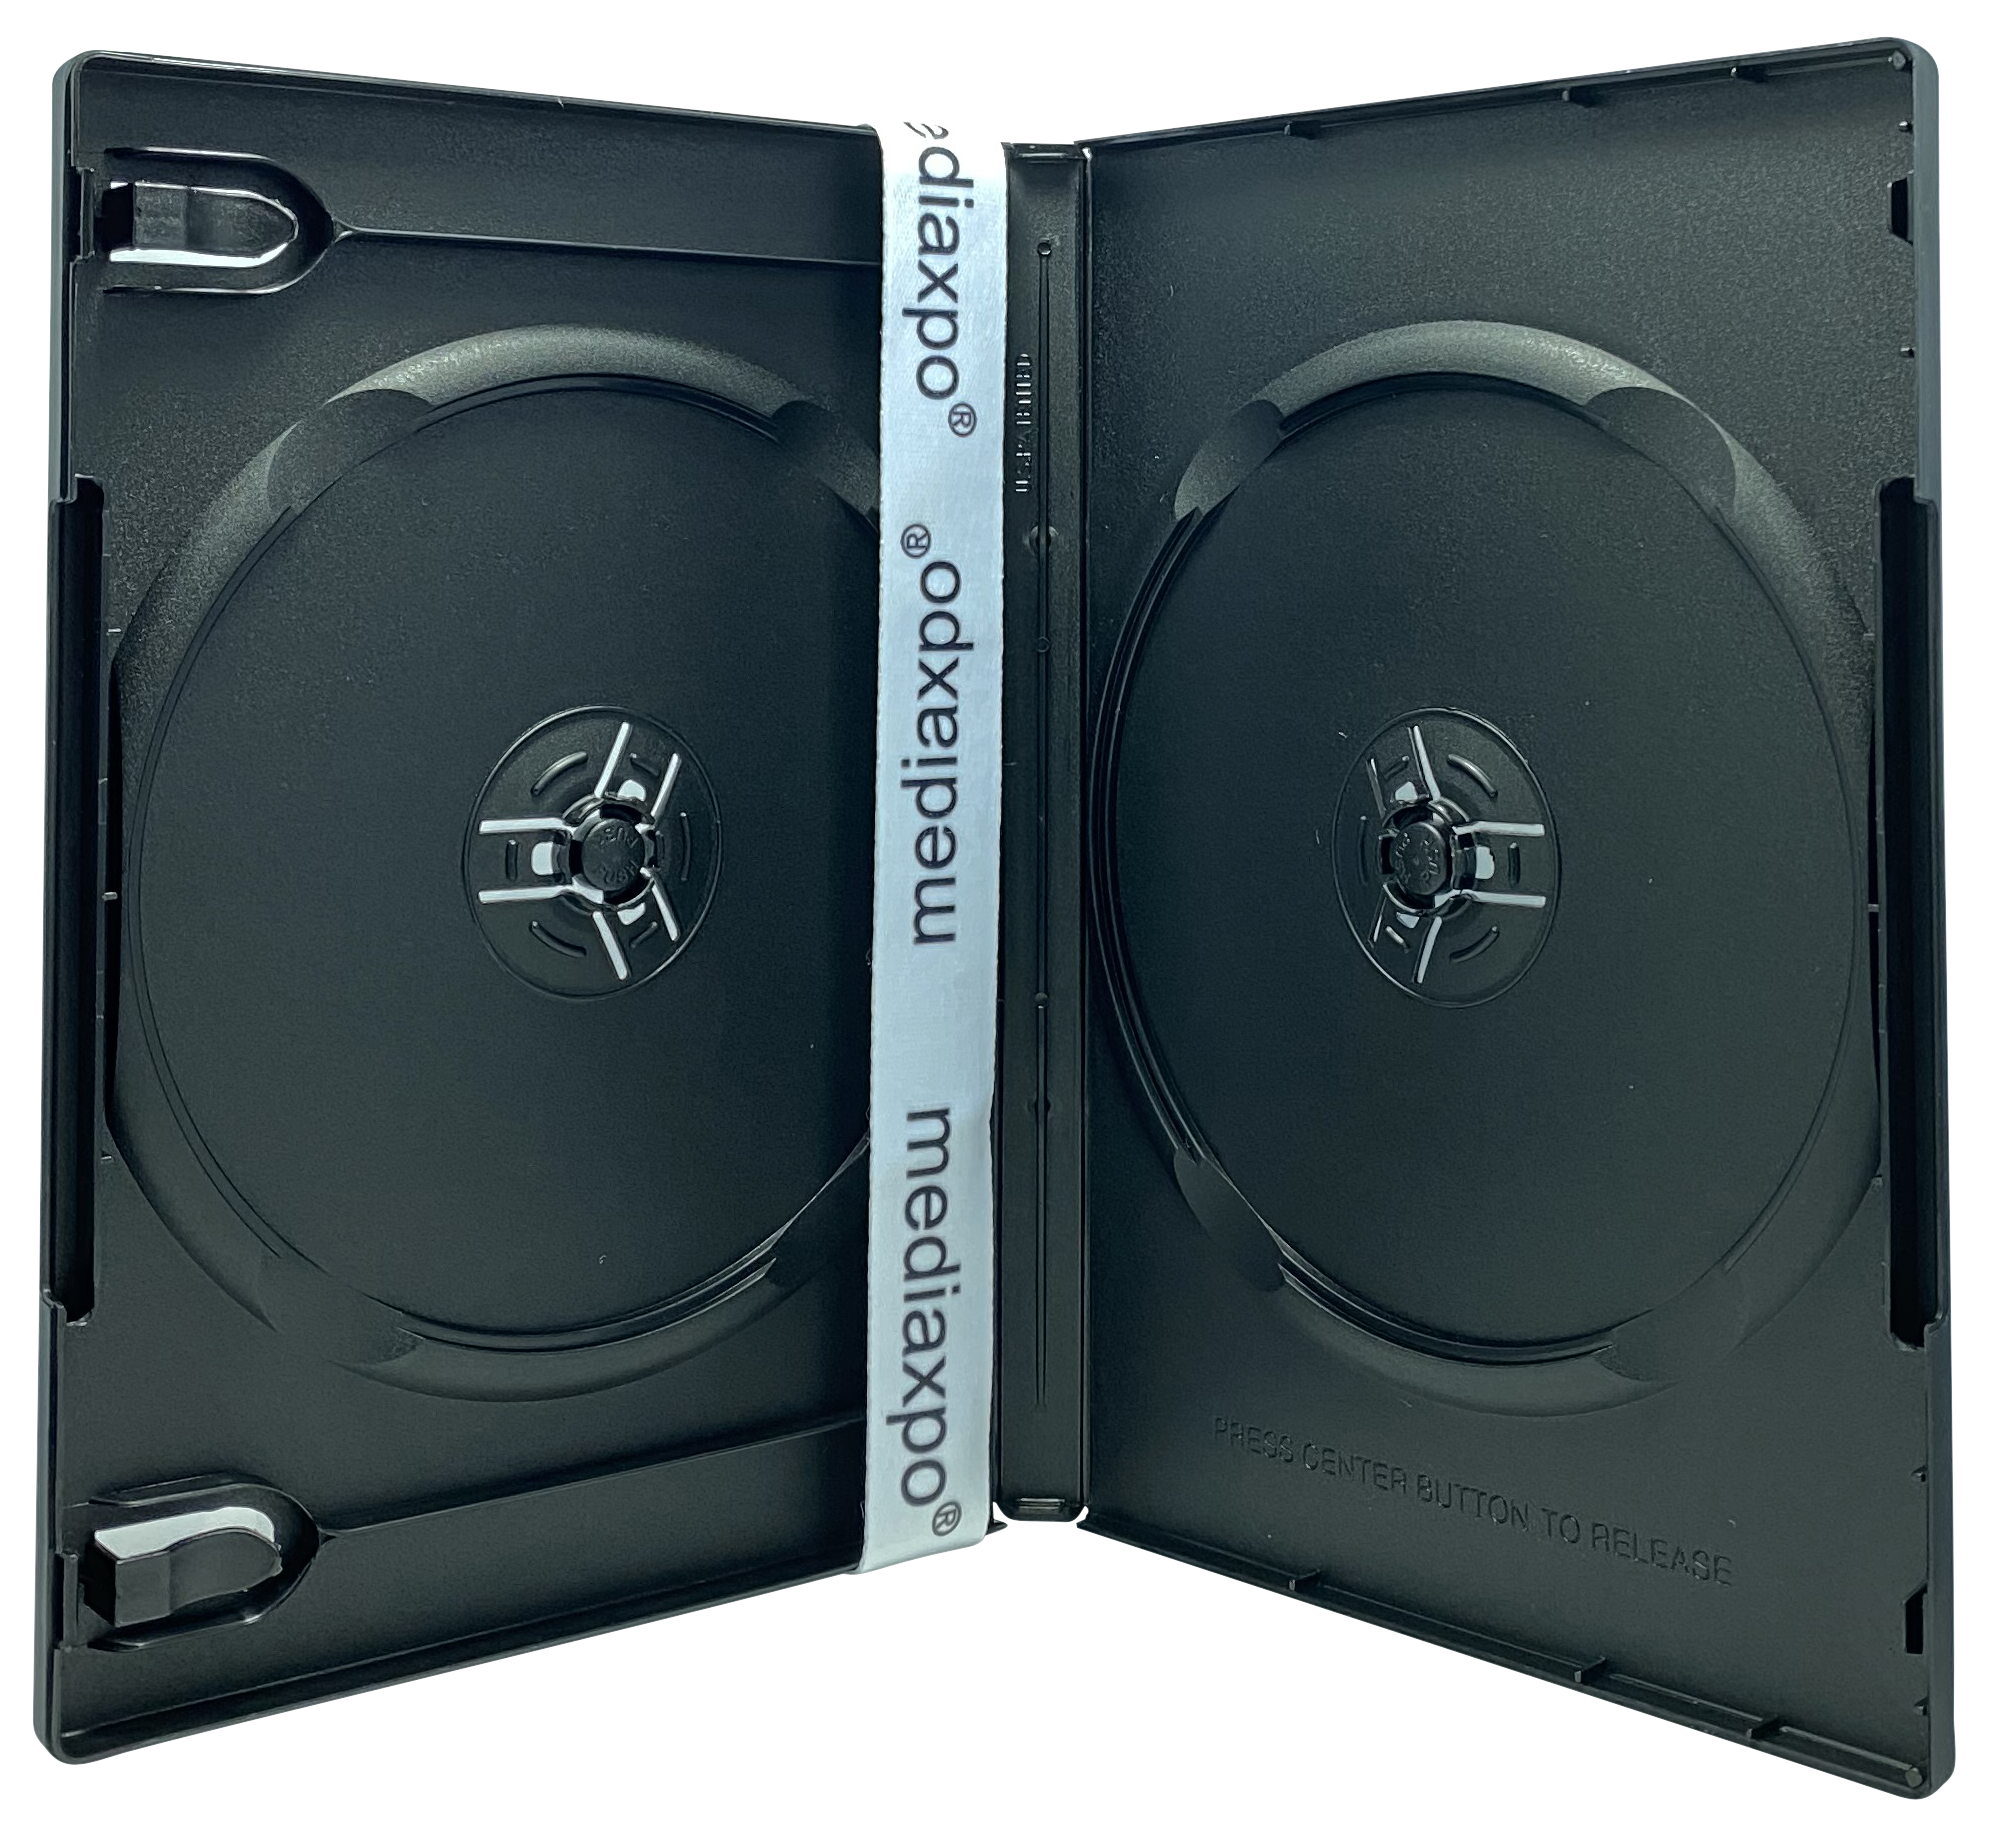 25 PREMIUM STANDARD Black Double DVD Cases (100% New Material)